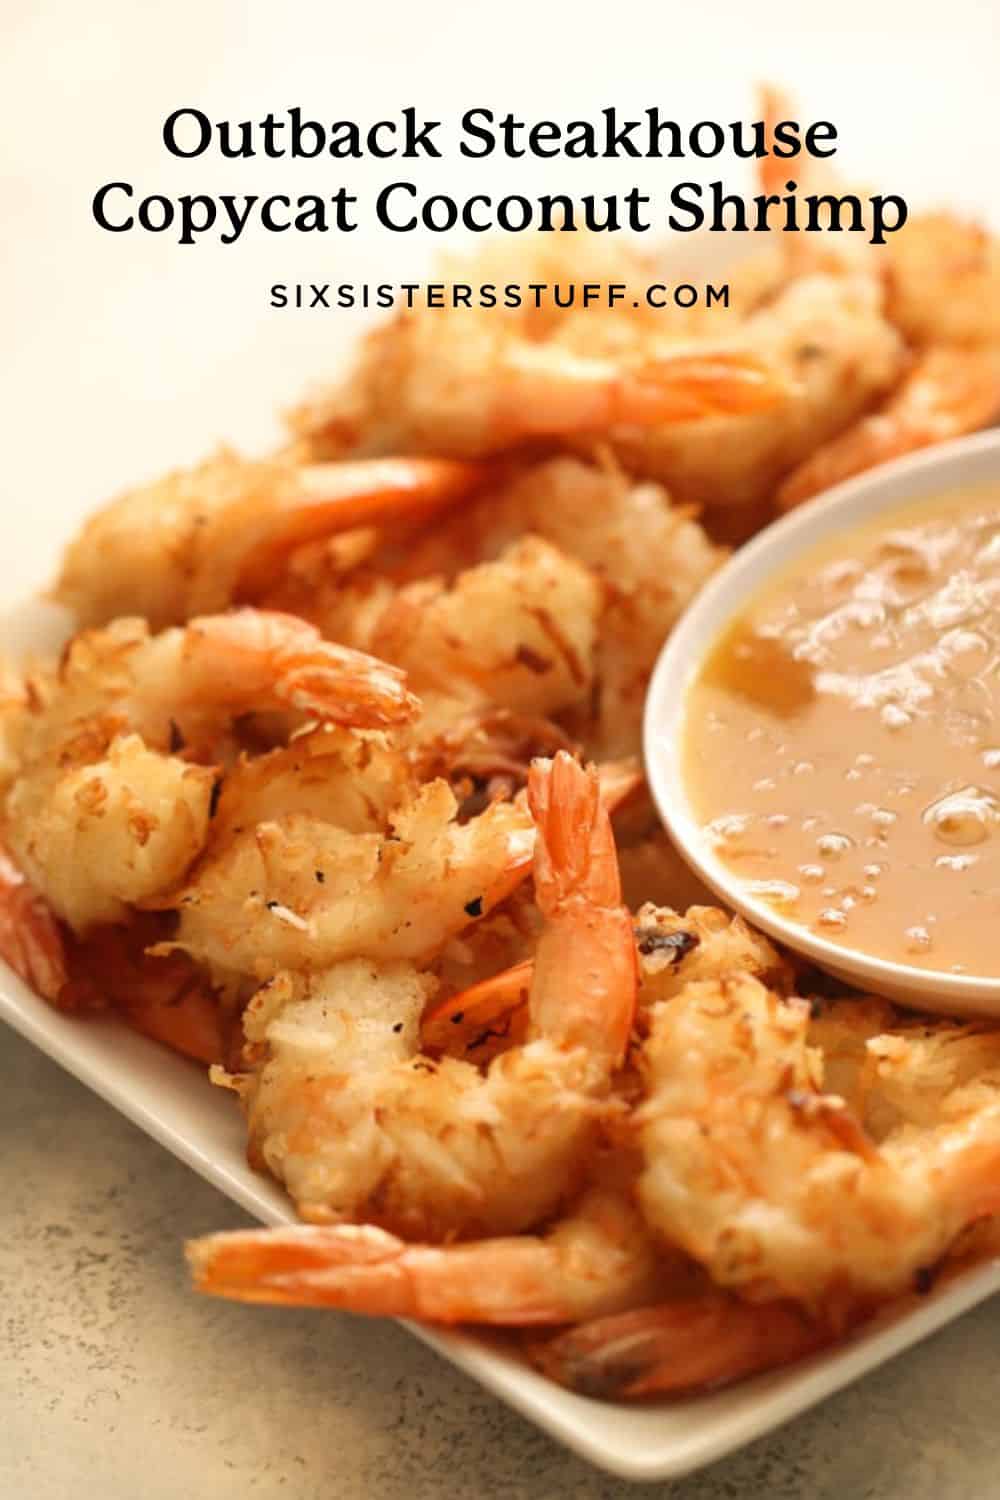 Outback Steakhouse Copycat Coconut Shrimp Recipe